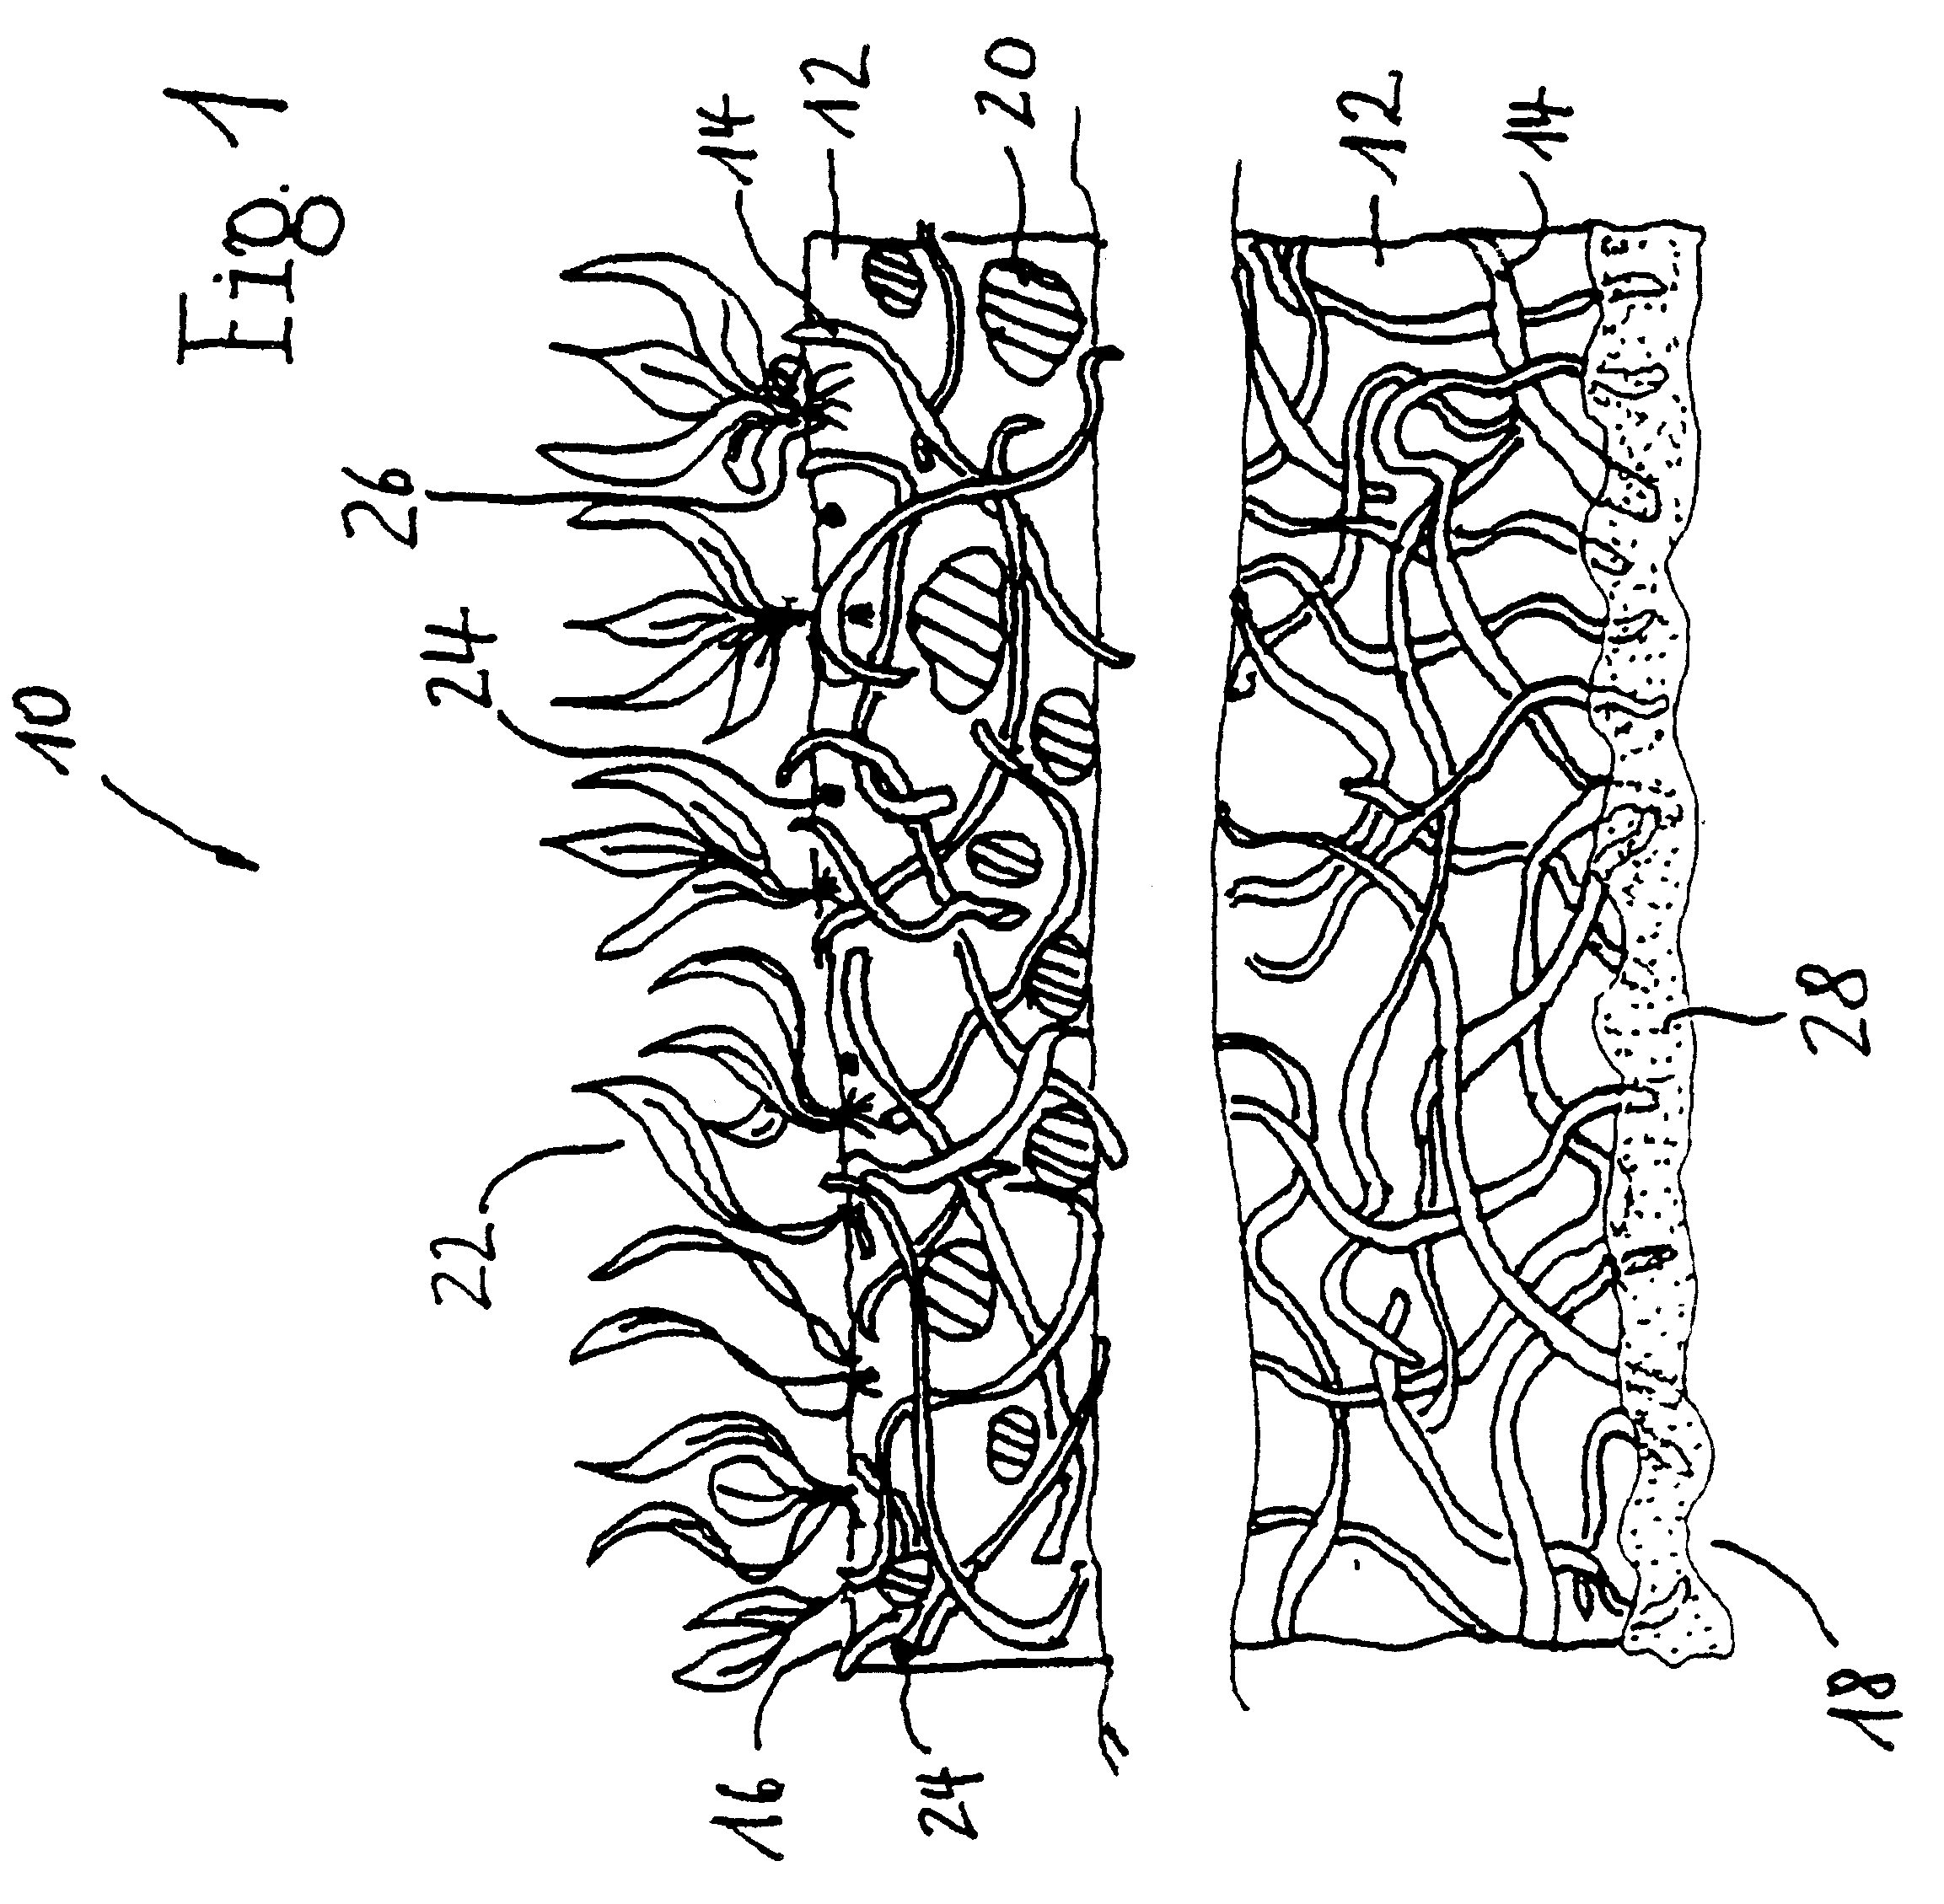 Vegetation support consisting of a mat of entangled organic fibers